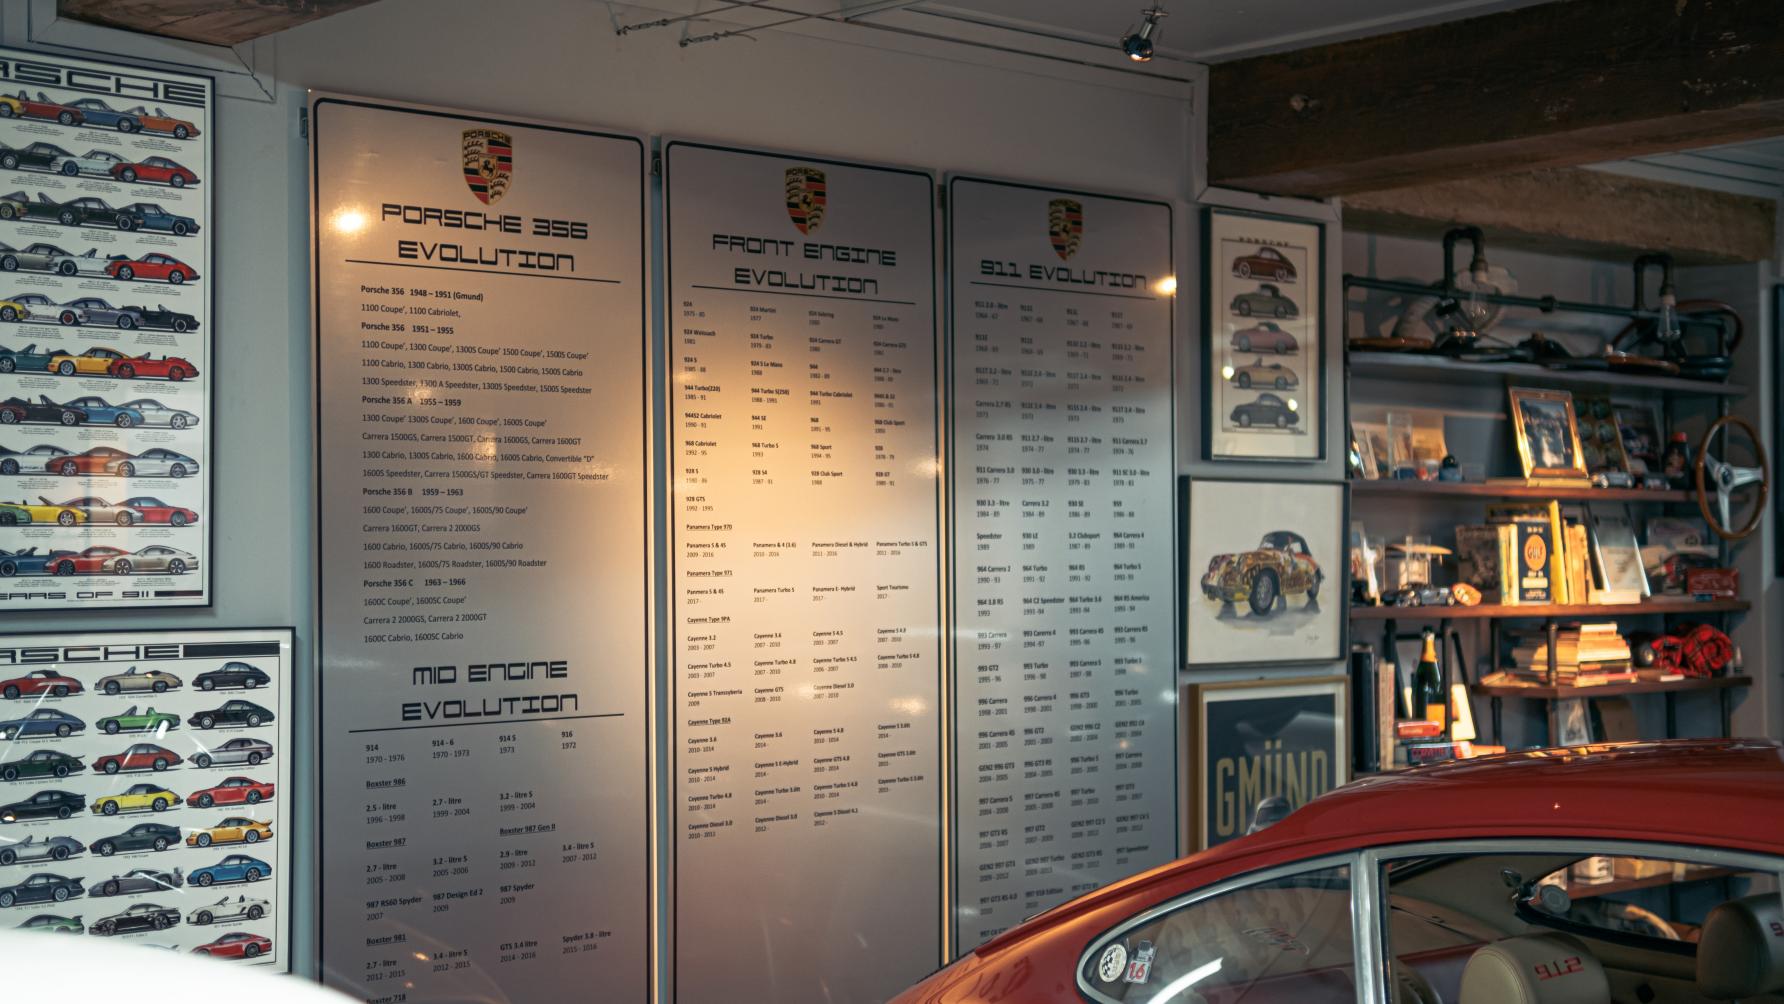 Porsche Garage collection of Michelle Hambly-Grobler